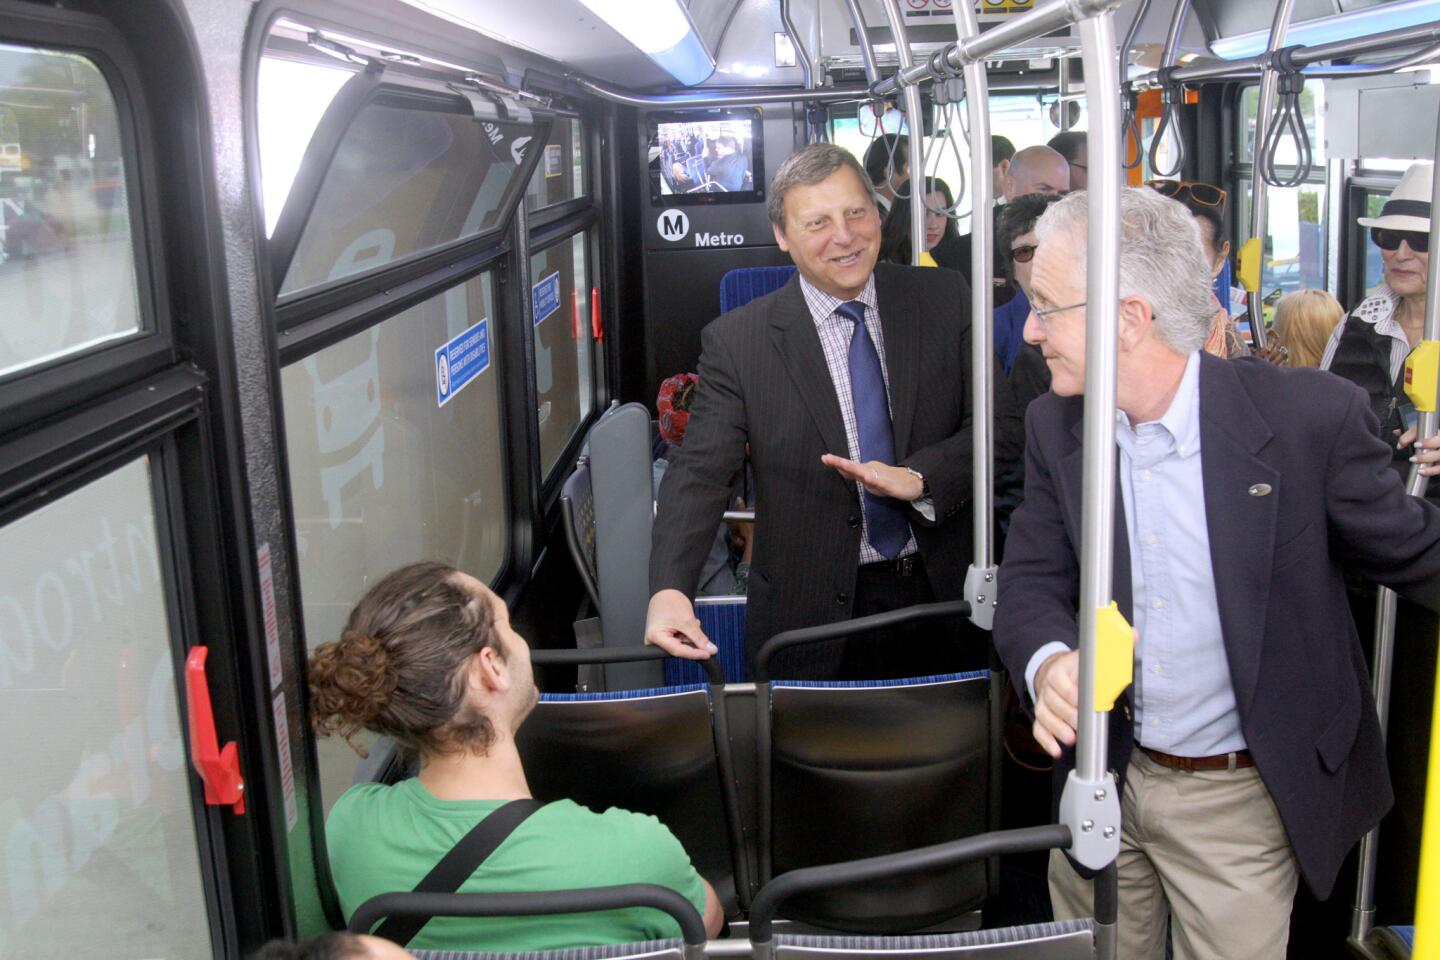 Photo Gallery: Glendale councilman Najarian, passengers ride new Metro express line 501